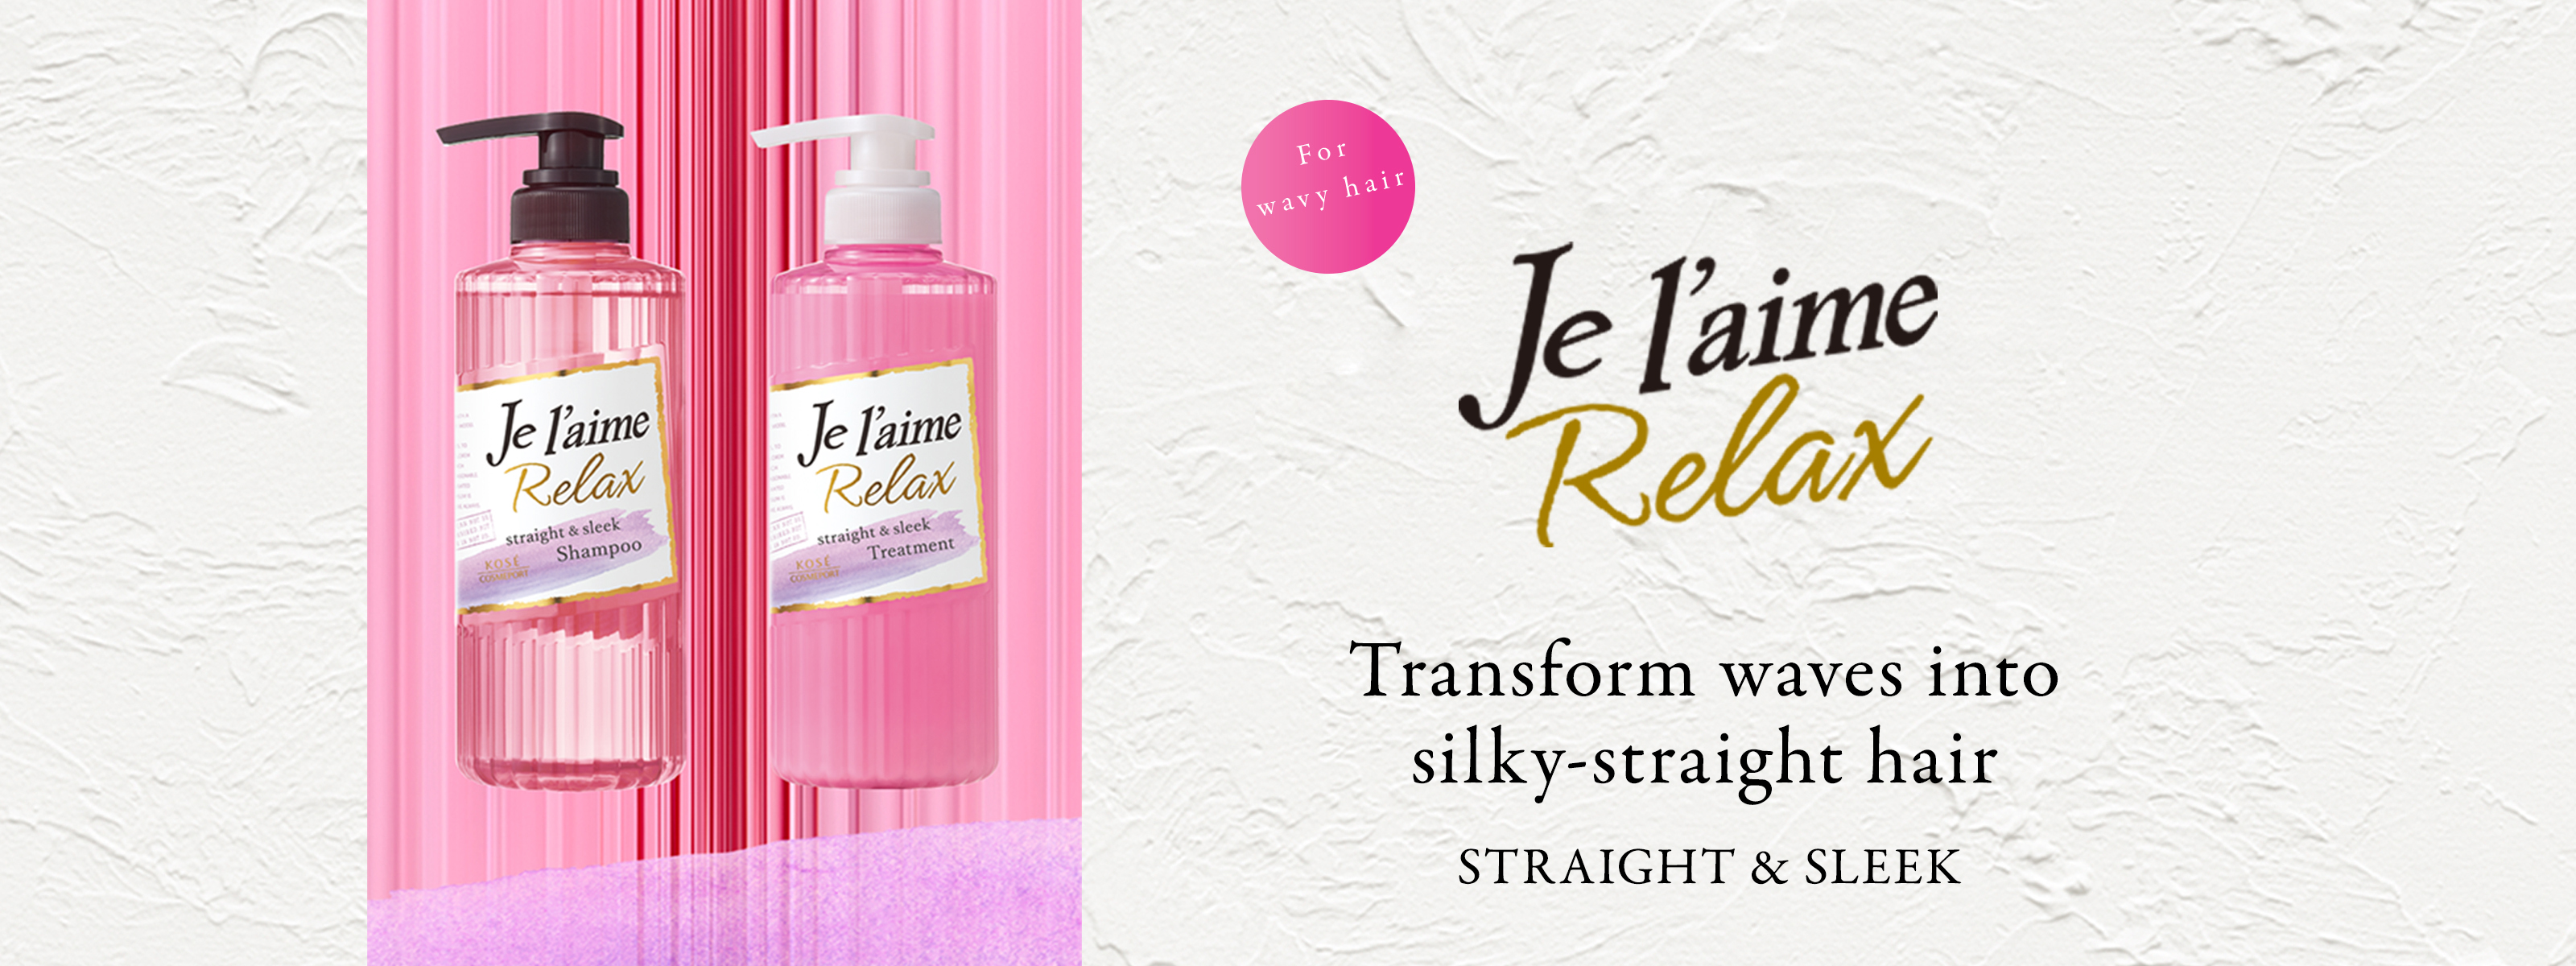 New Je l'aime Relax Transform waves into silky-straight hair. Straight & sleek